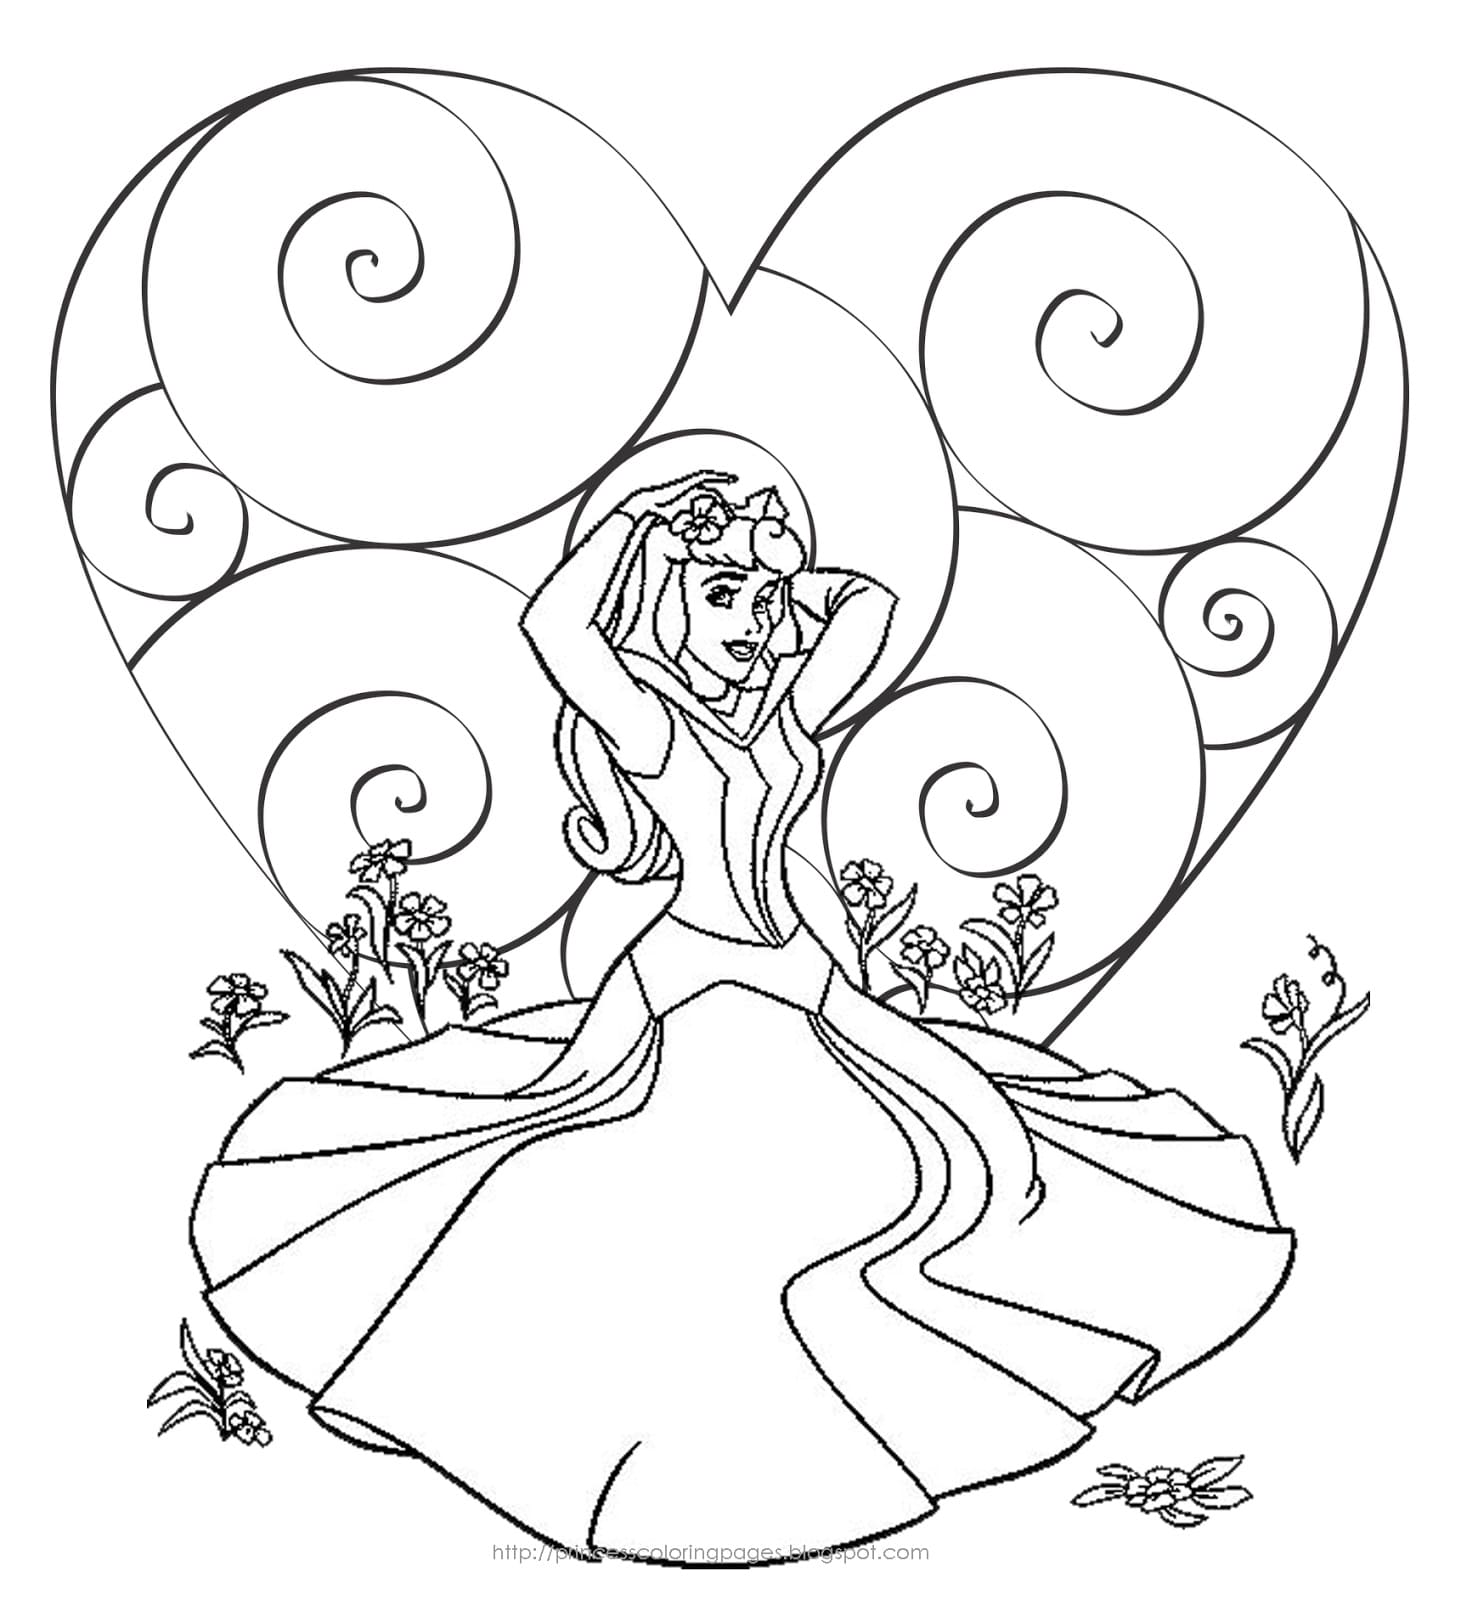 Princess Disney Valentine Coloring Page   Free Printable Coloring ...